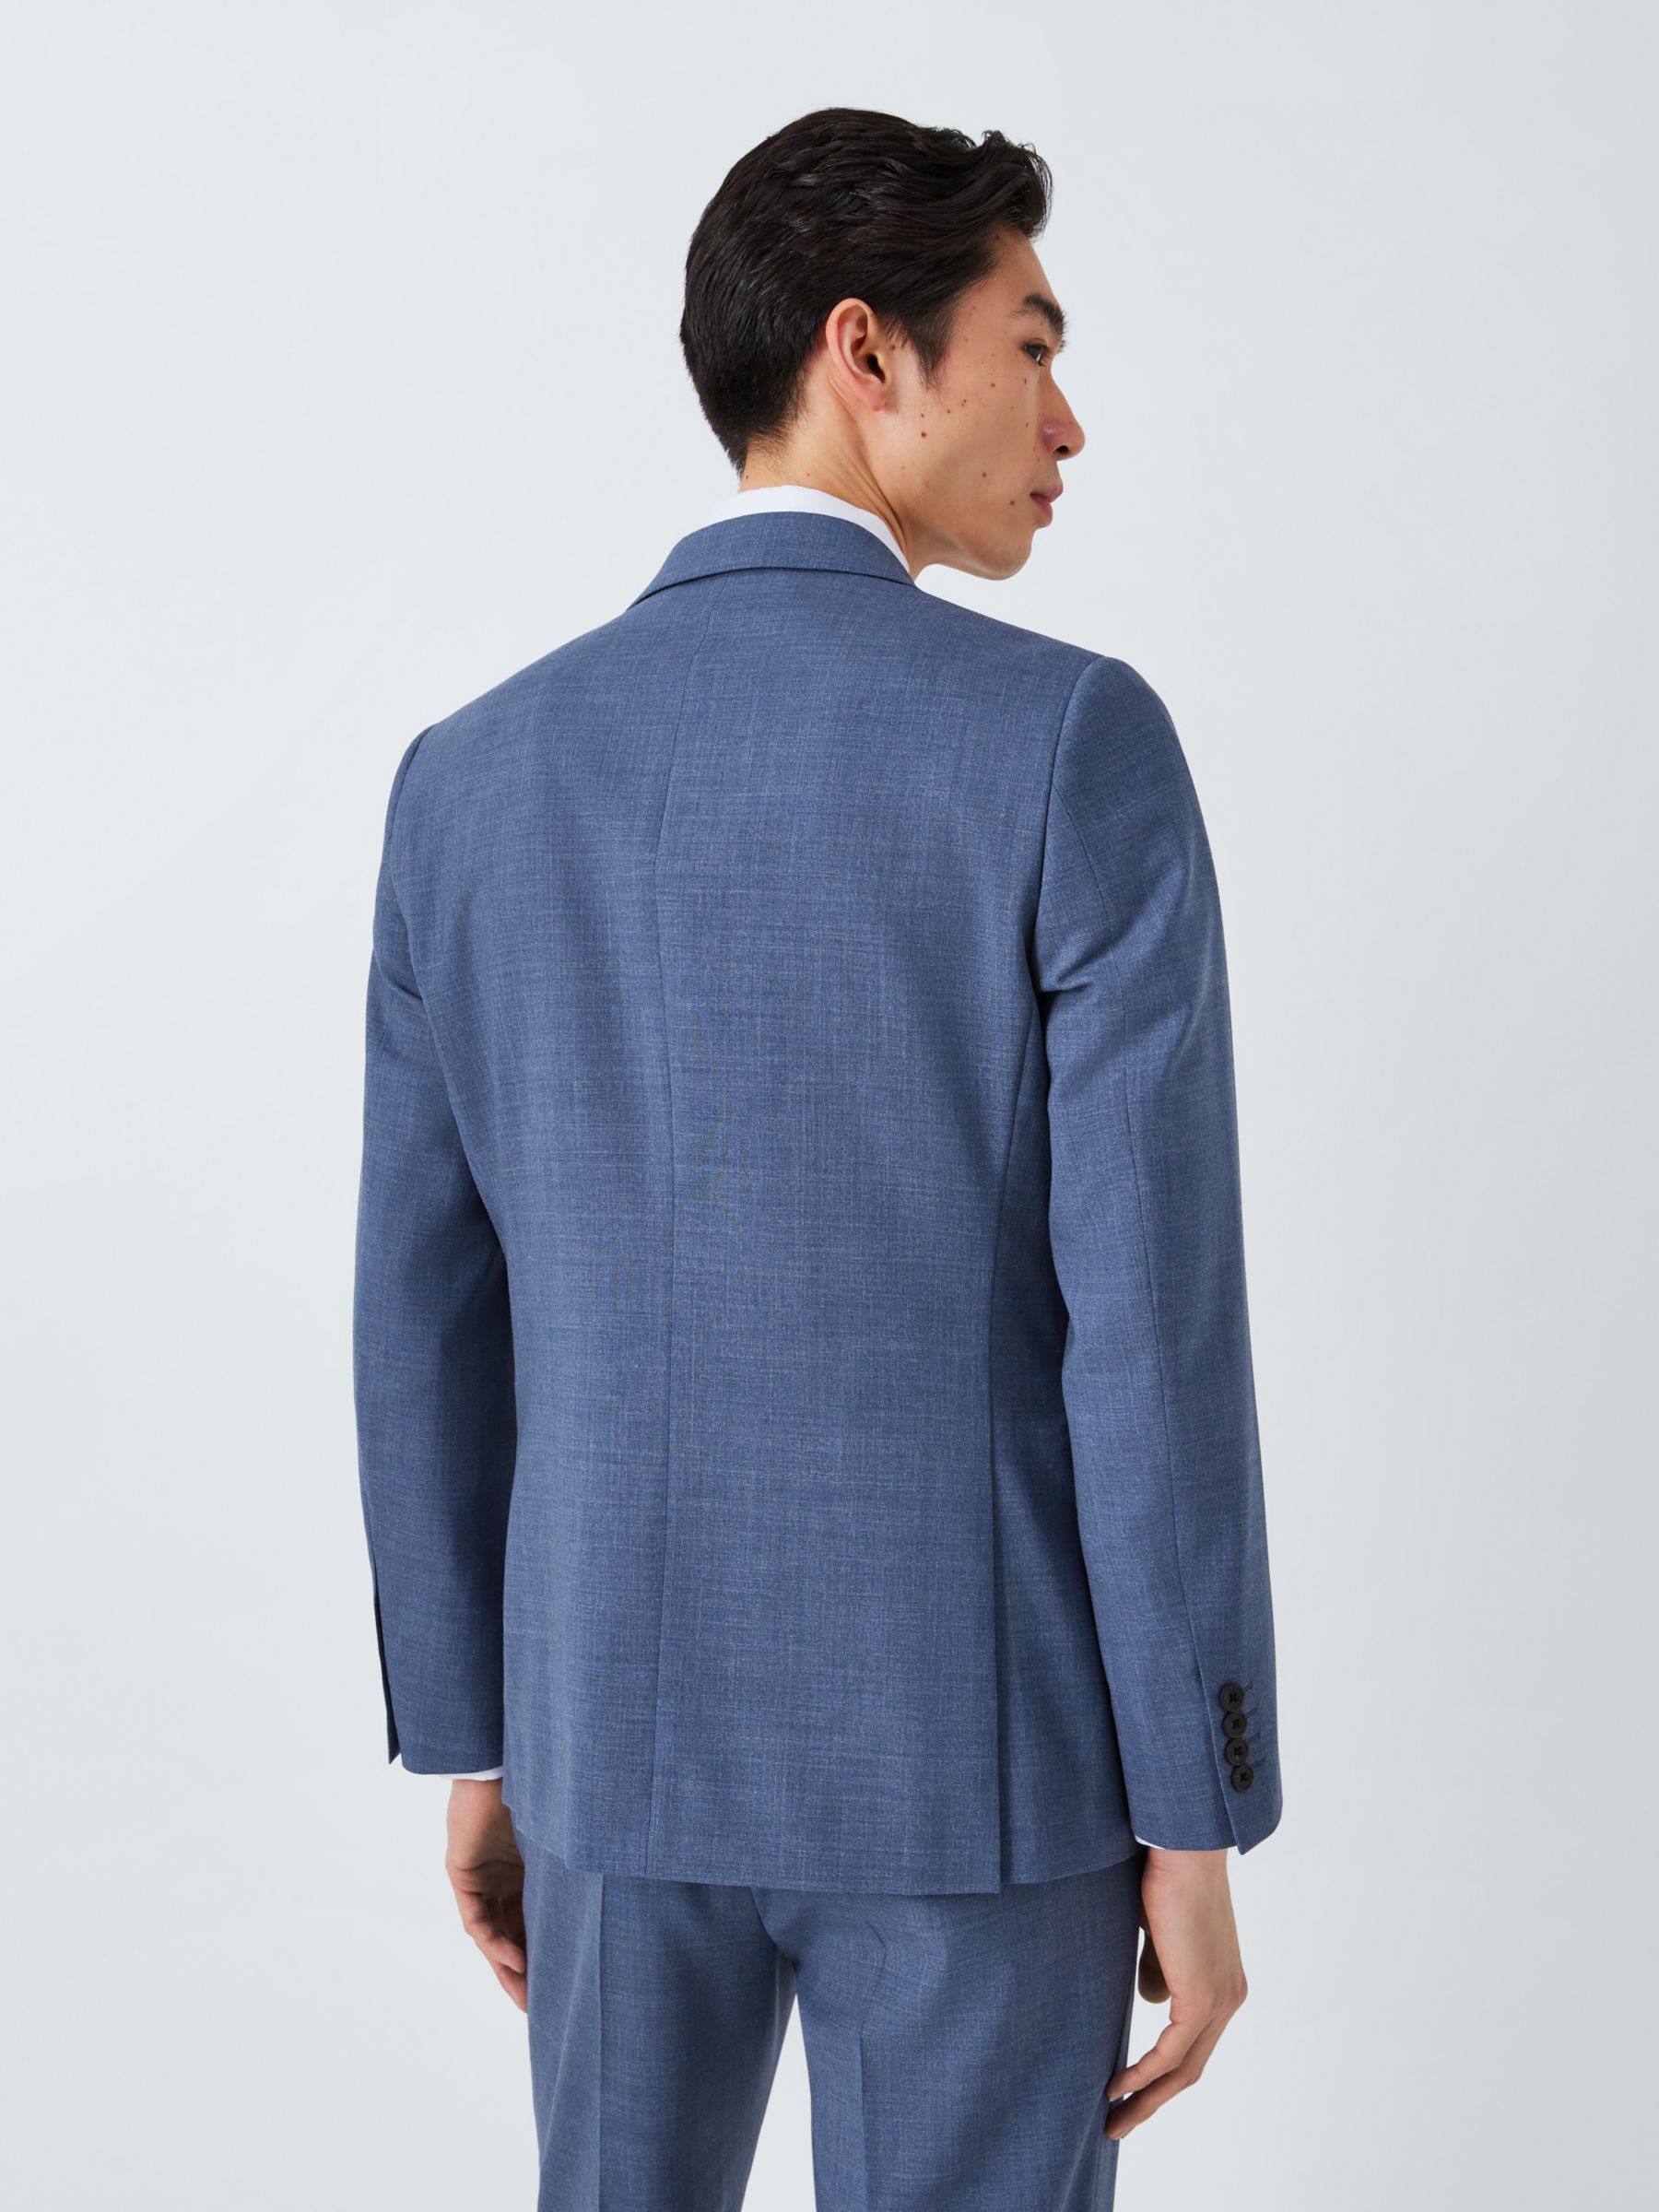 John Lewis Warwick Regular Fit Wool Suit Jacket, Mid Blue, 46R